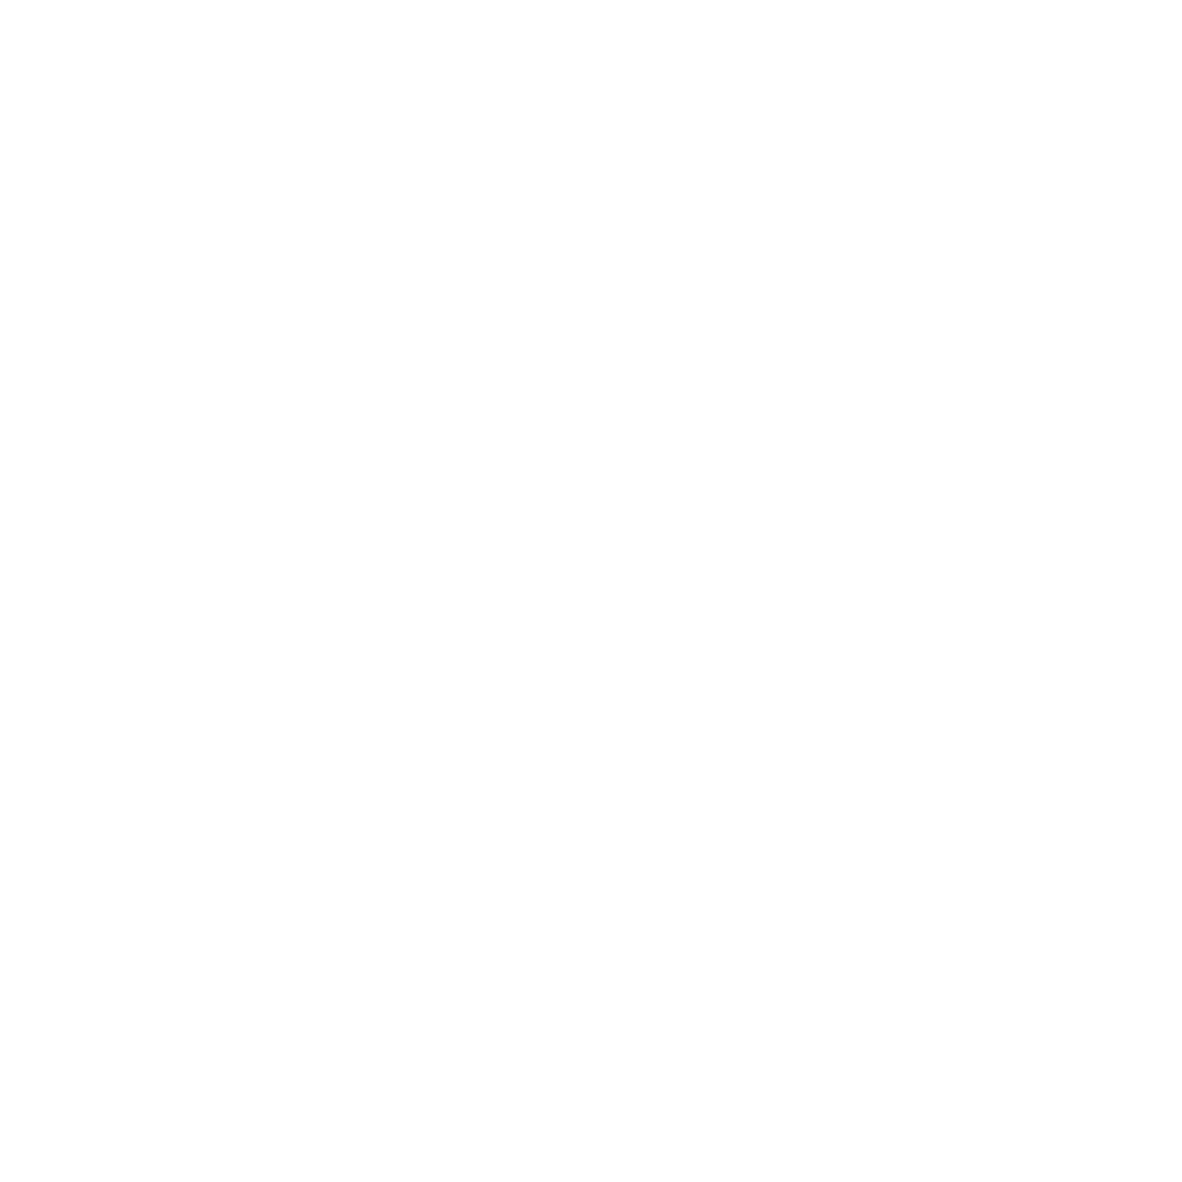 UNEP_2019_English White.png